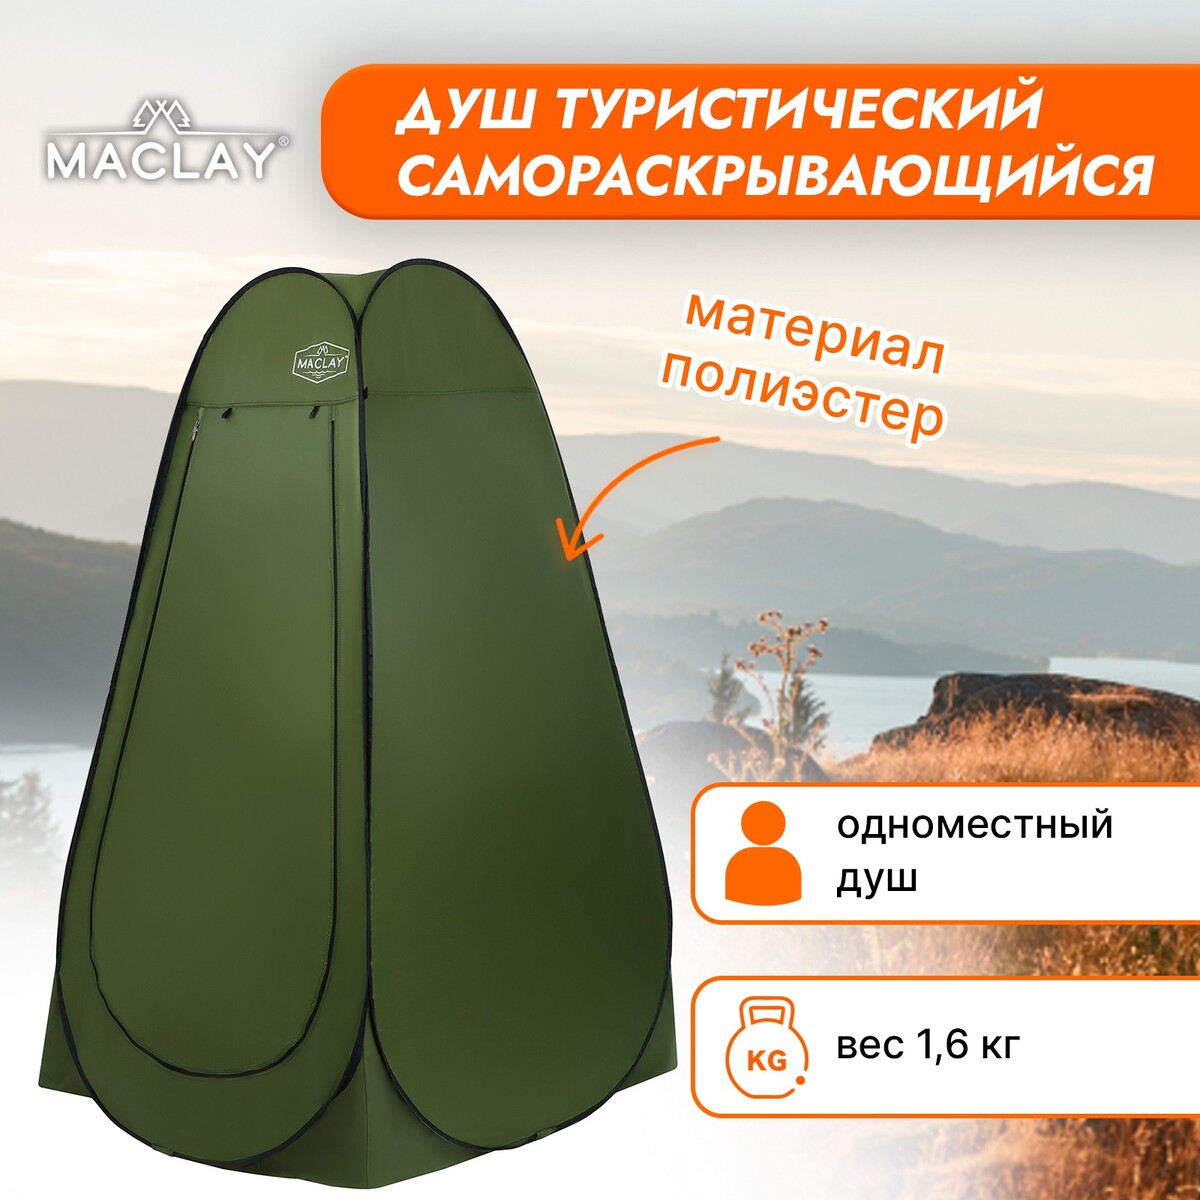 Палатка туристическая maclay, самораскрывающаяся, для душа, 120х120х195 см, цвет зеленый палатка трекинговая maclay fisht 2 205х150х105 см 2 местная